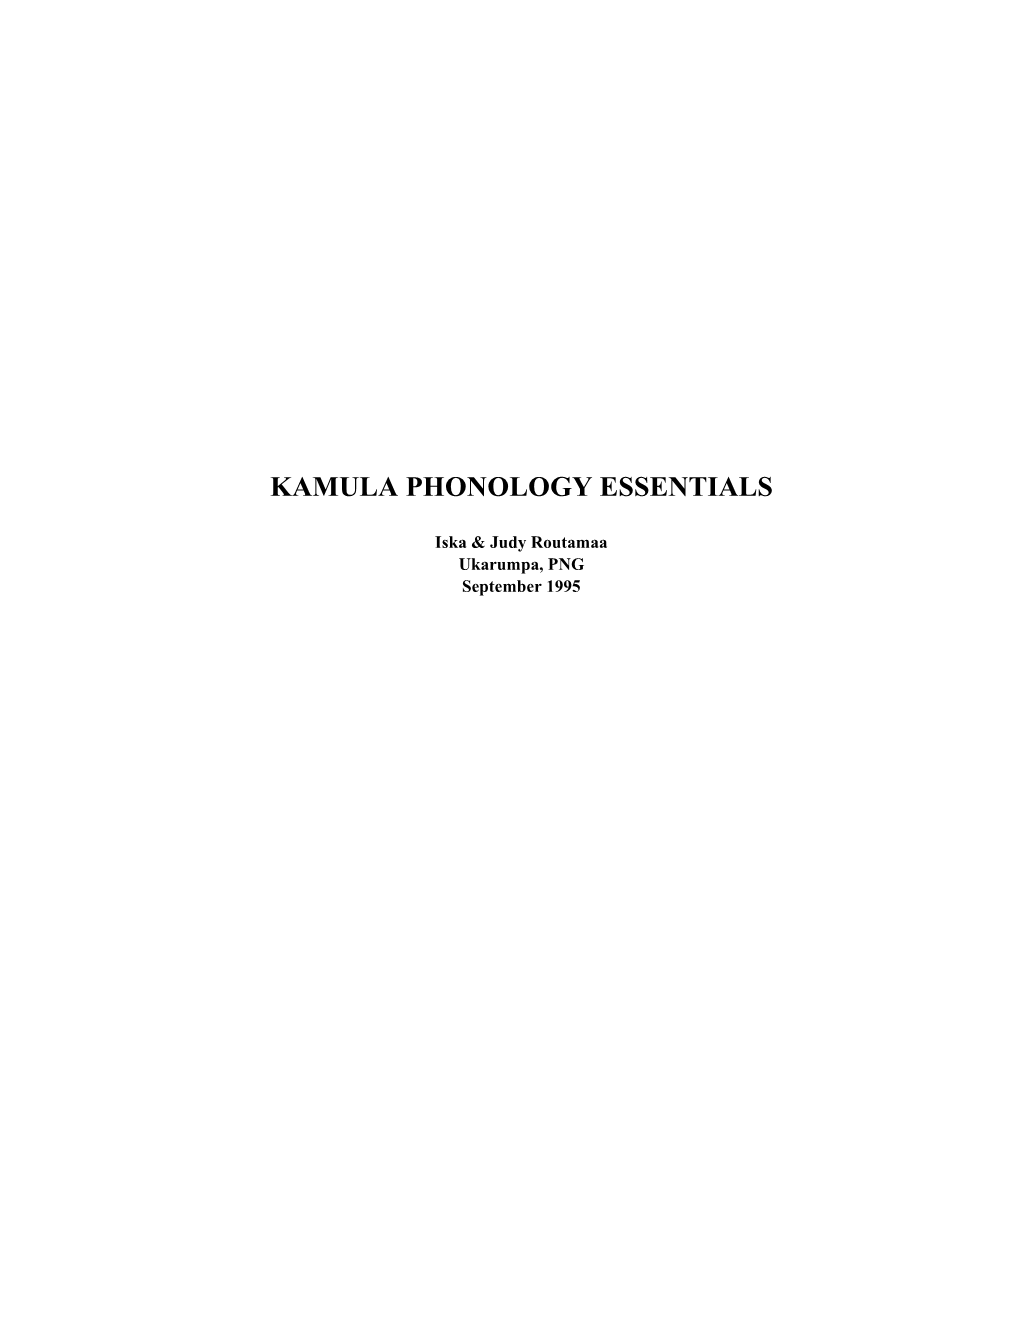 Kamula Phonology Essentials